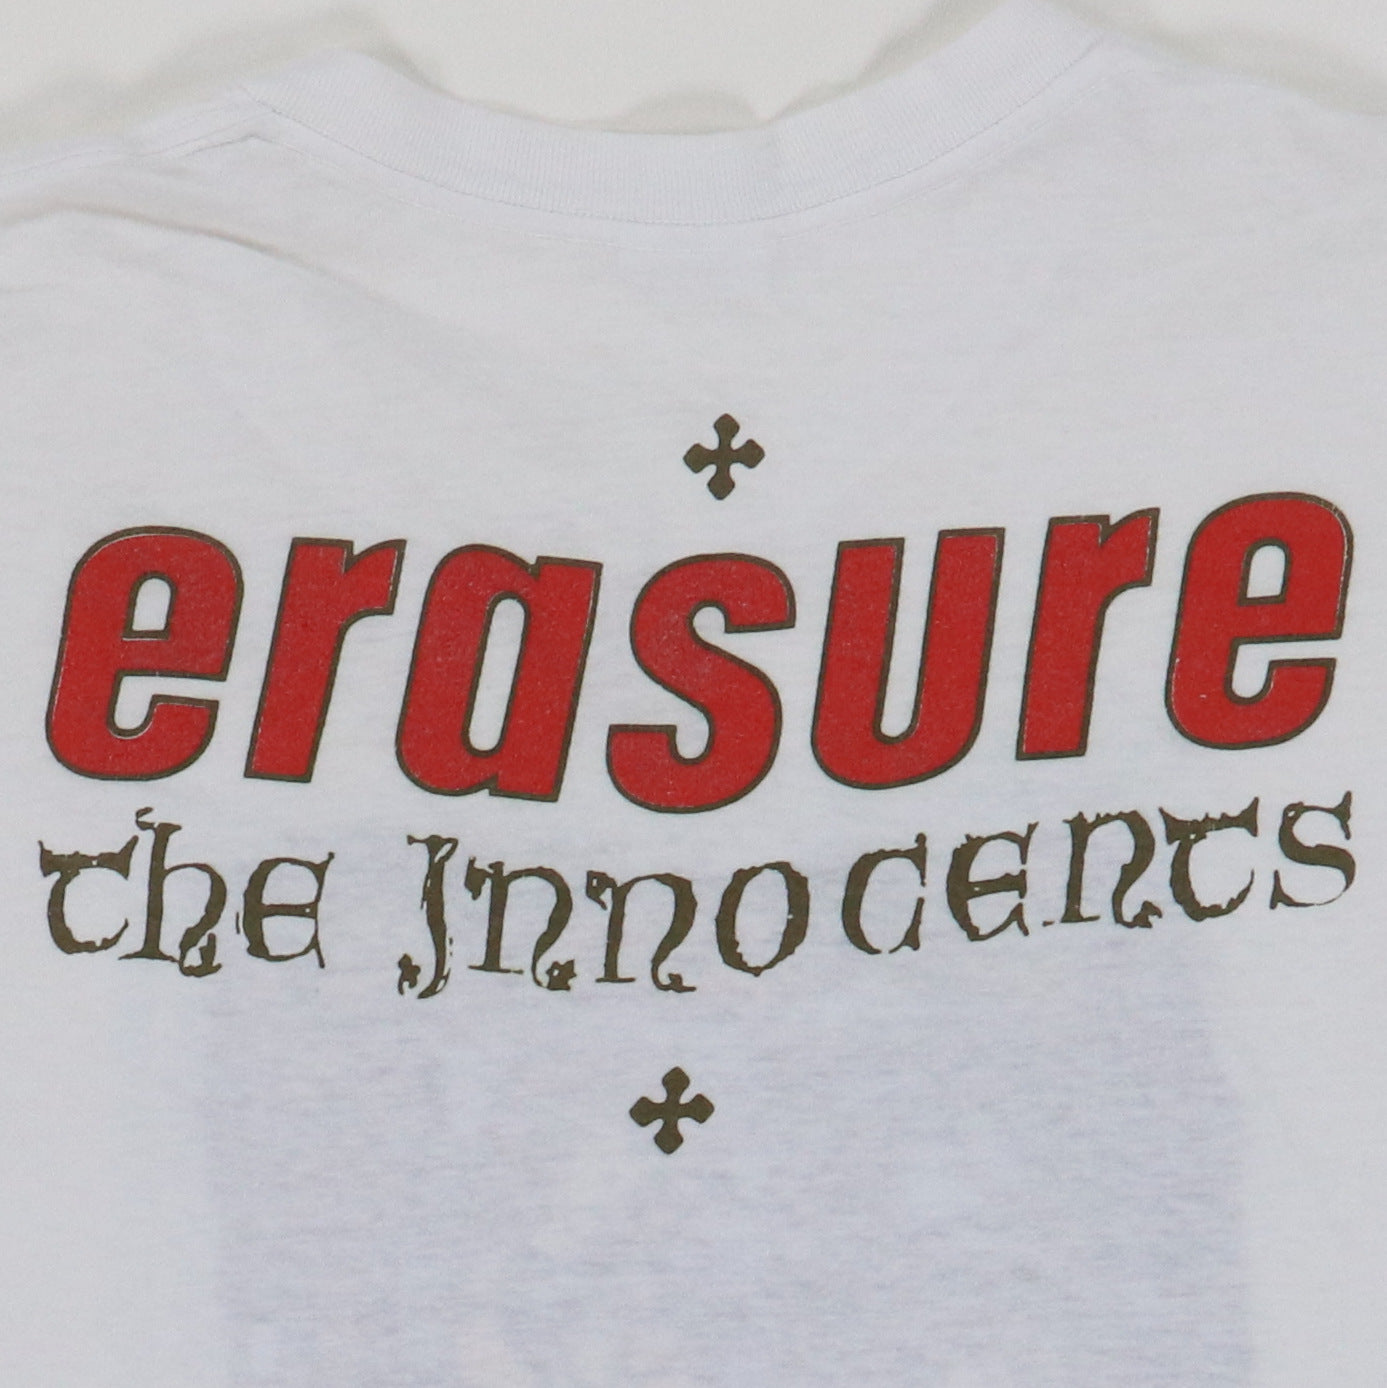 1999 Erasure The Innocents Shirt